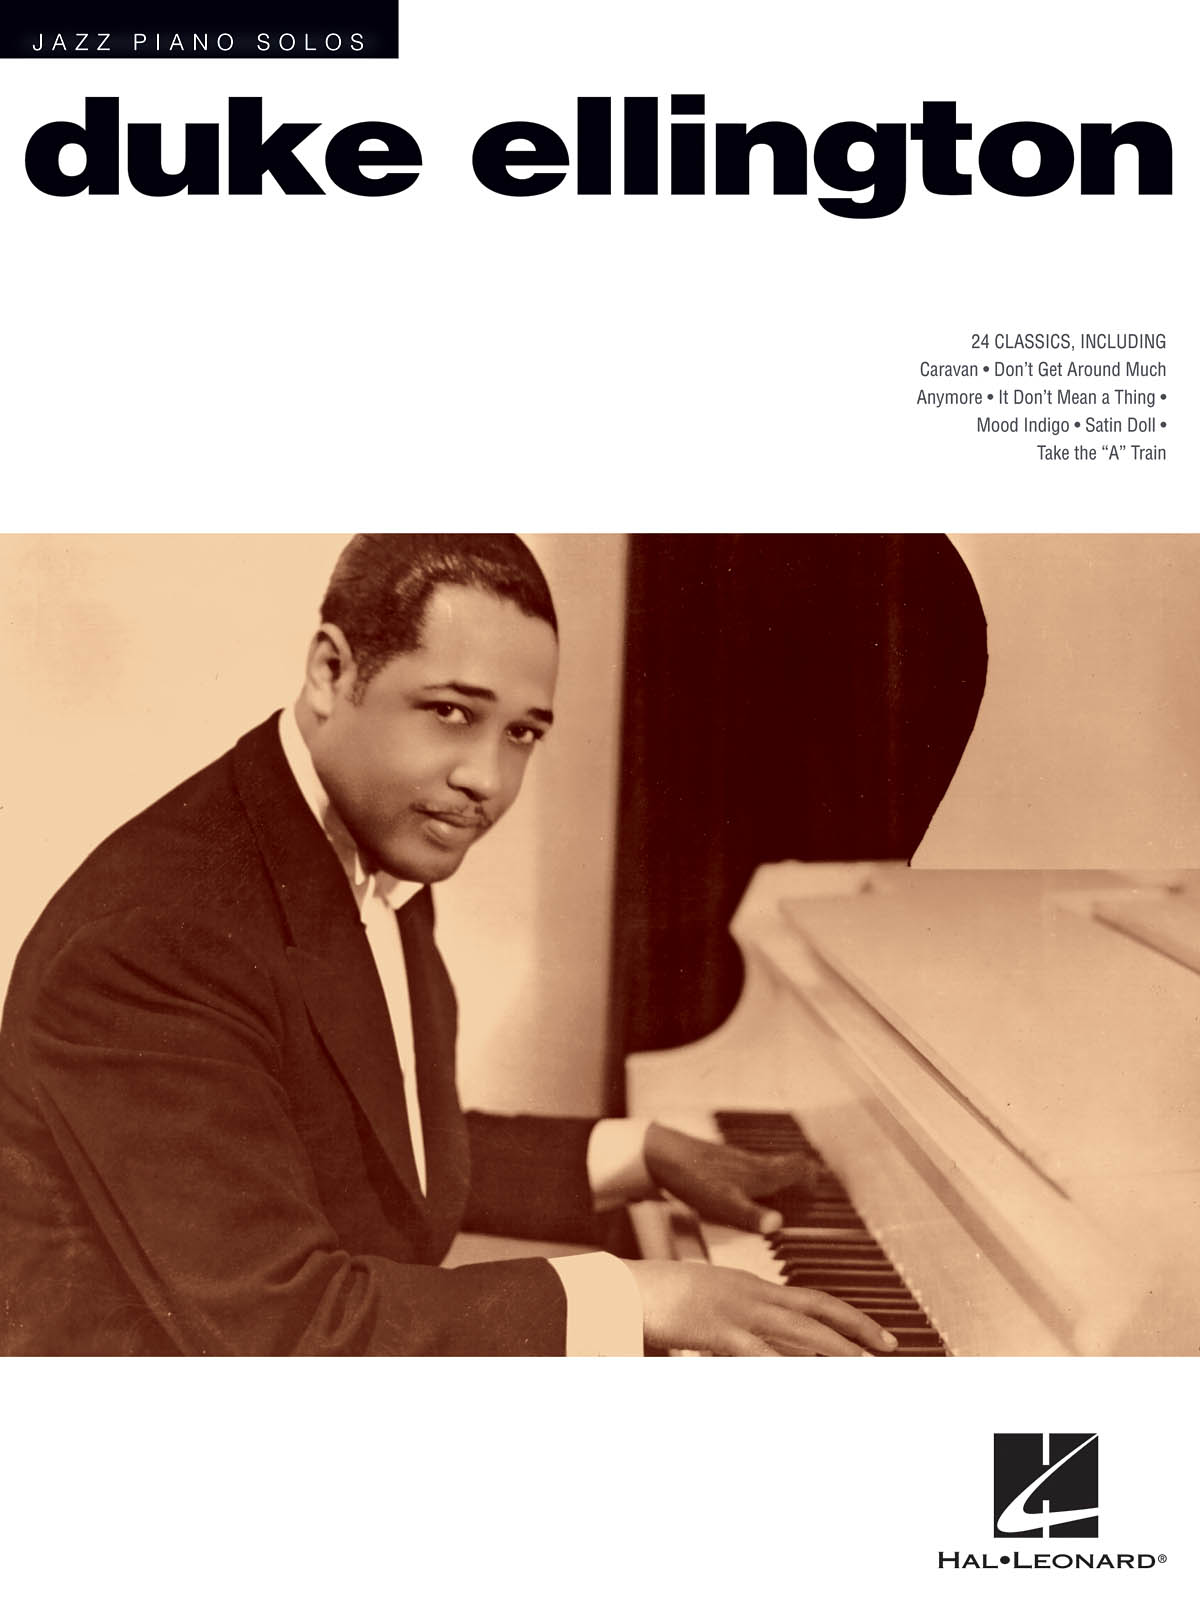 Jazz Piano Solos Series Volume 9: Duke Ellington